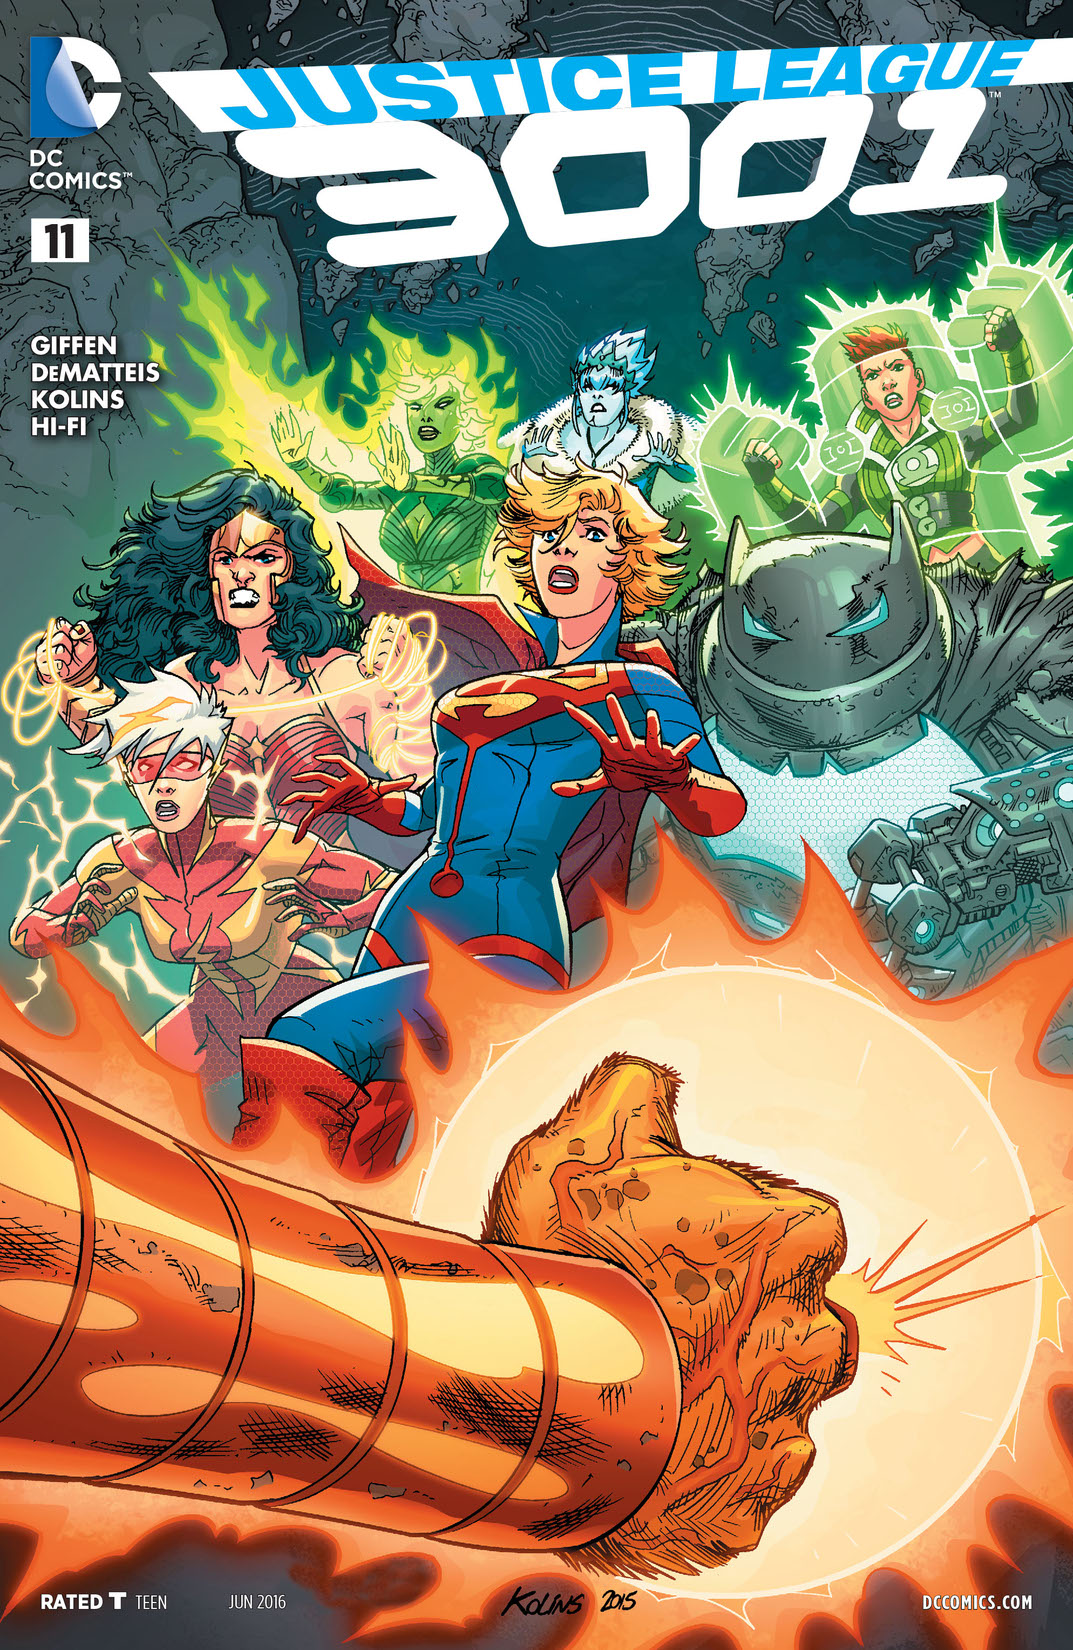 Justice League 3001 #11 preview images